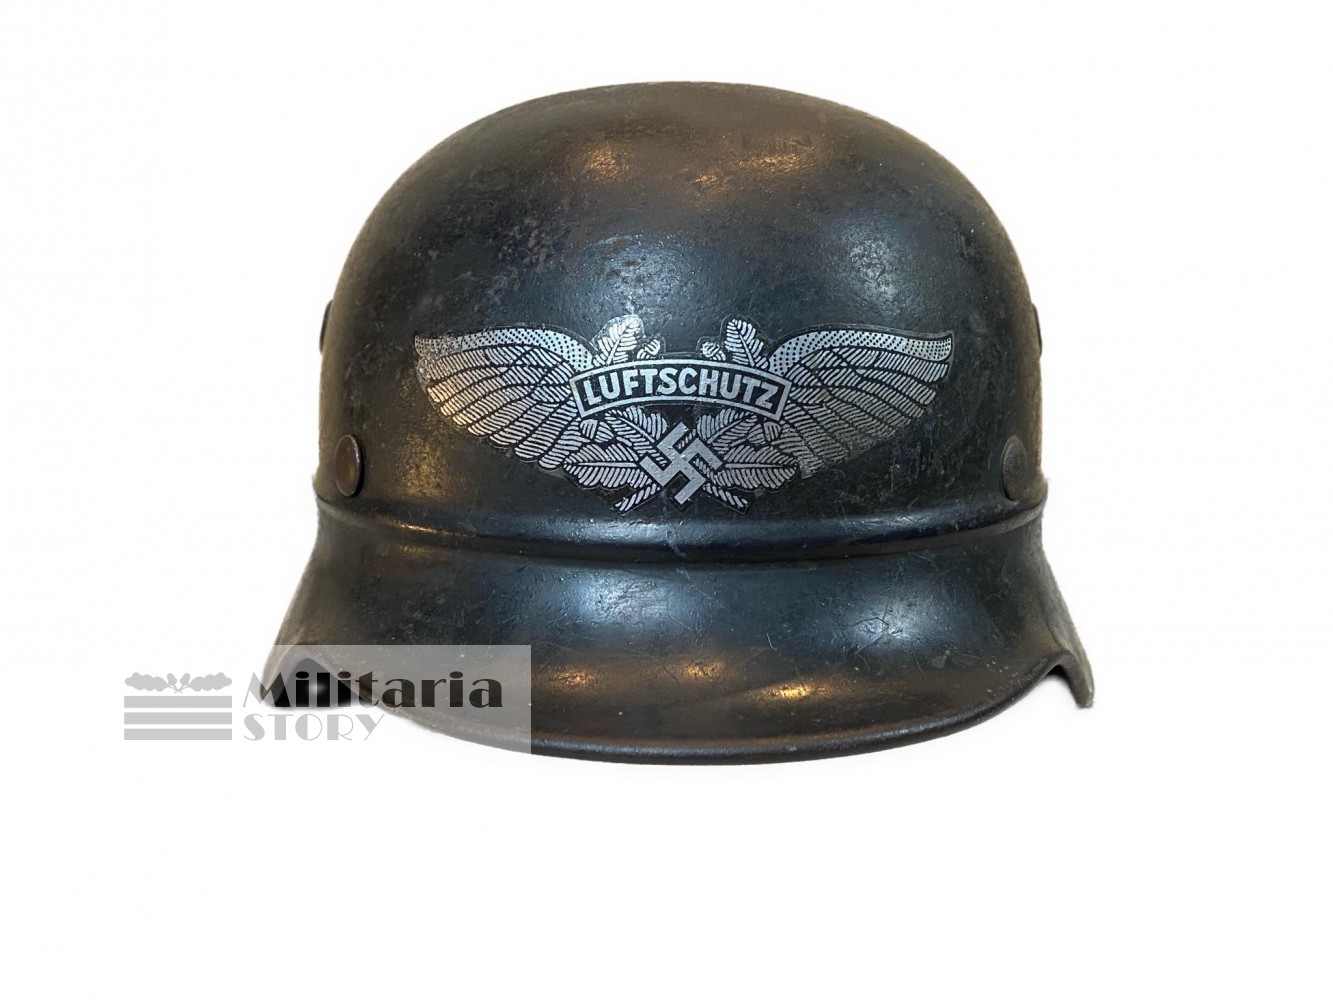 Luftschutz M40 helmet - Luftschutz M40 helmet: WW2 German Headgear